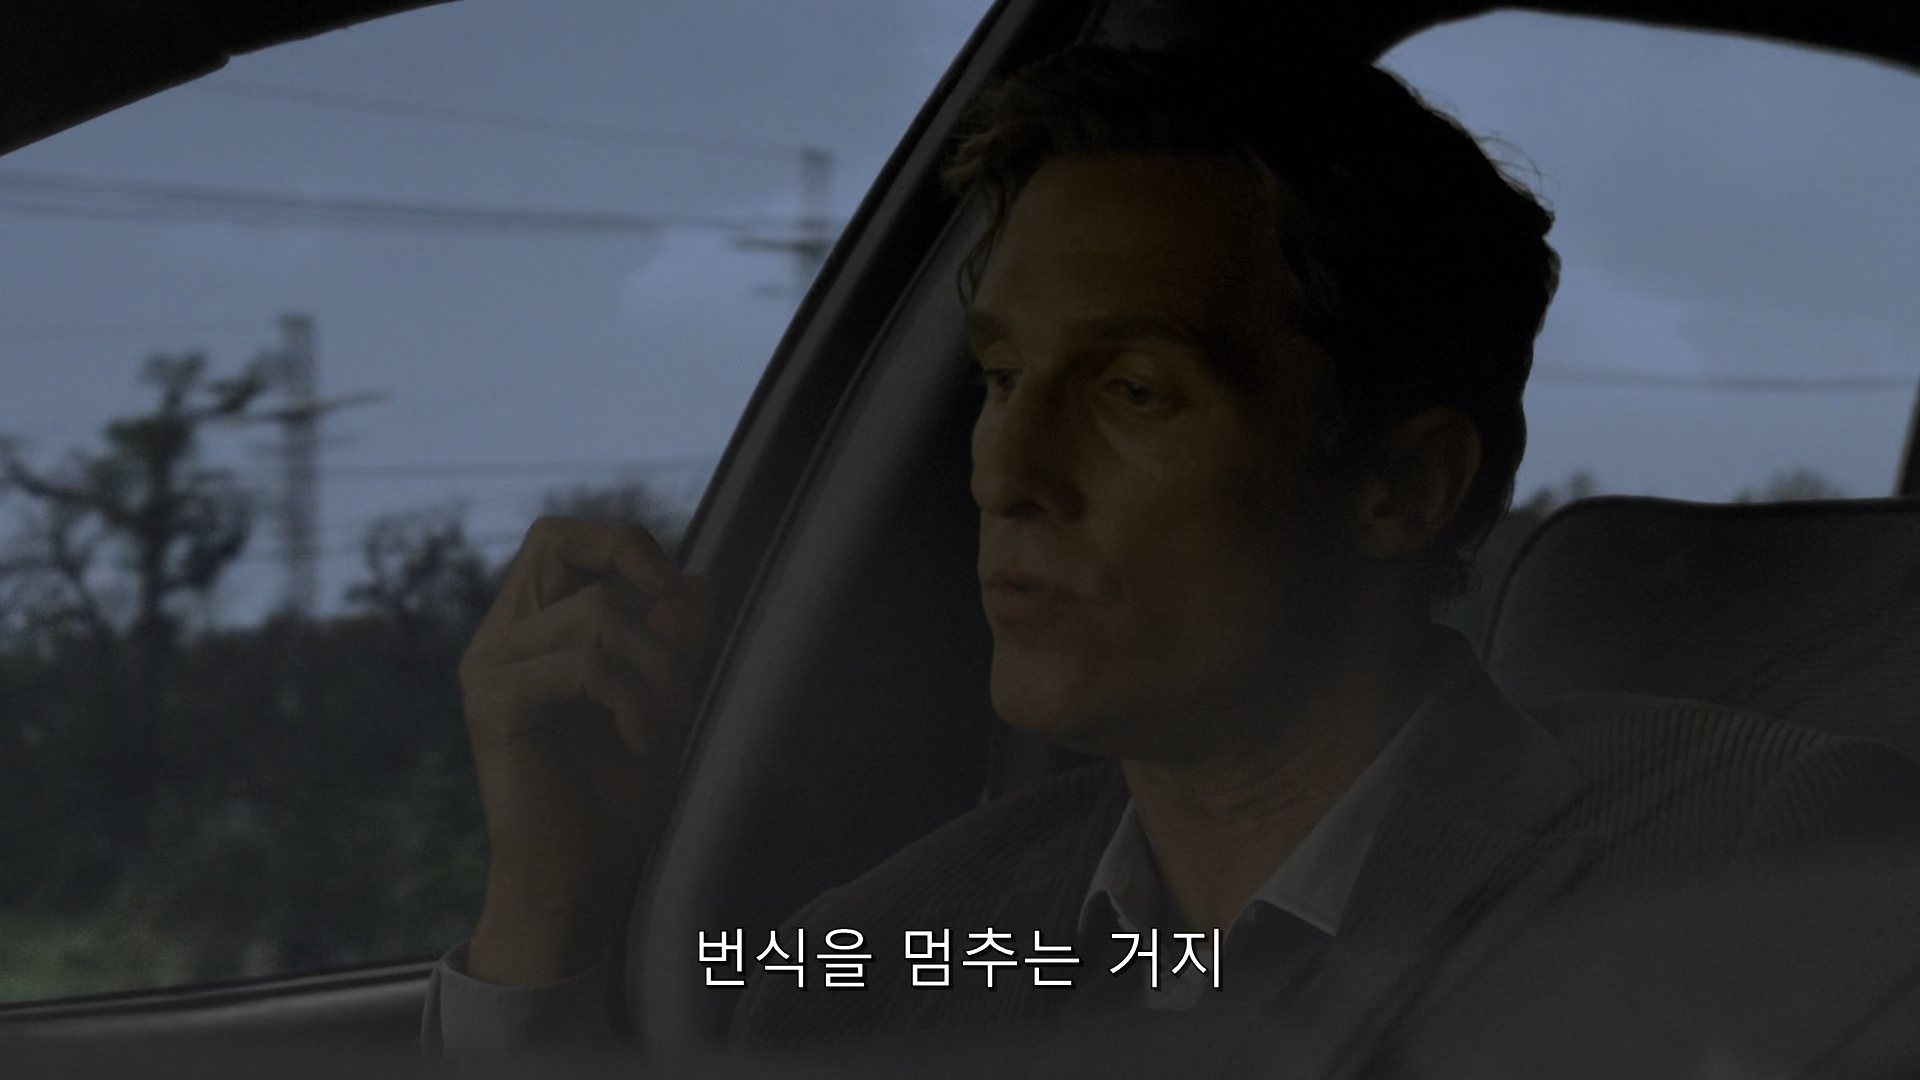 True Detective (2014) - S01E01 - The Long Bright Dark (1080p BluRay x265 afm72).mkv_001017377.jpg